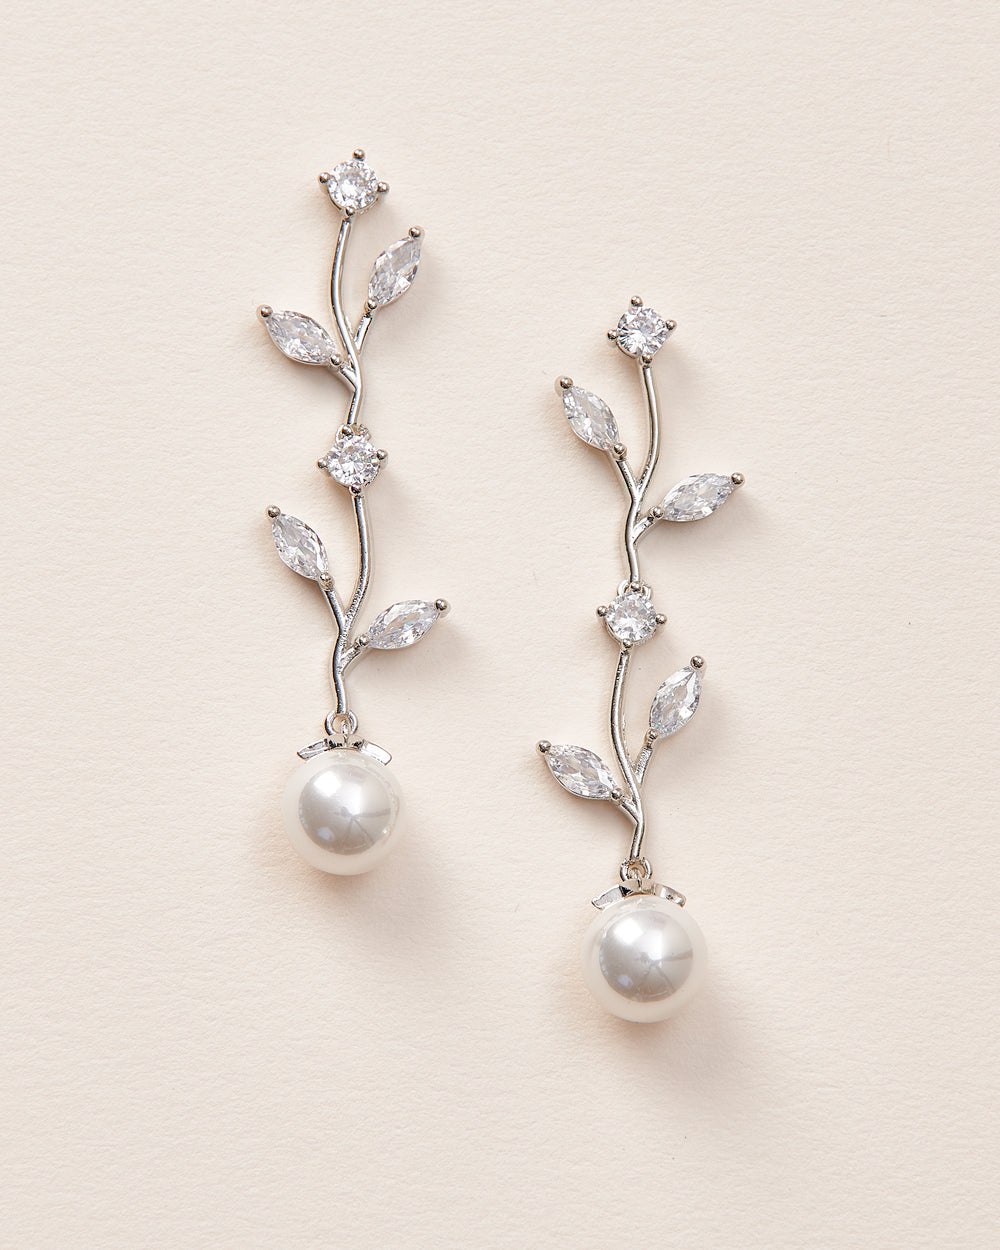 Hesroicy Elegant Faux Pearls Long Earrings Pearls String Linear Dangle  Wedding Party Gift 